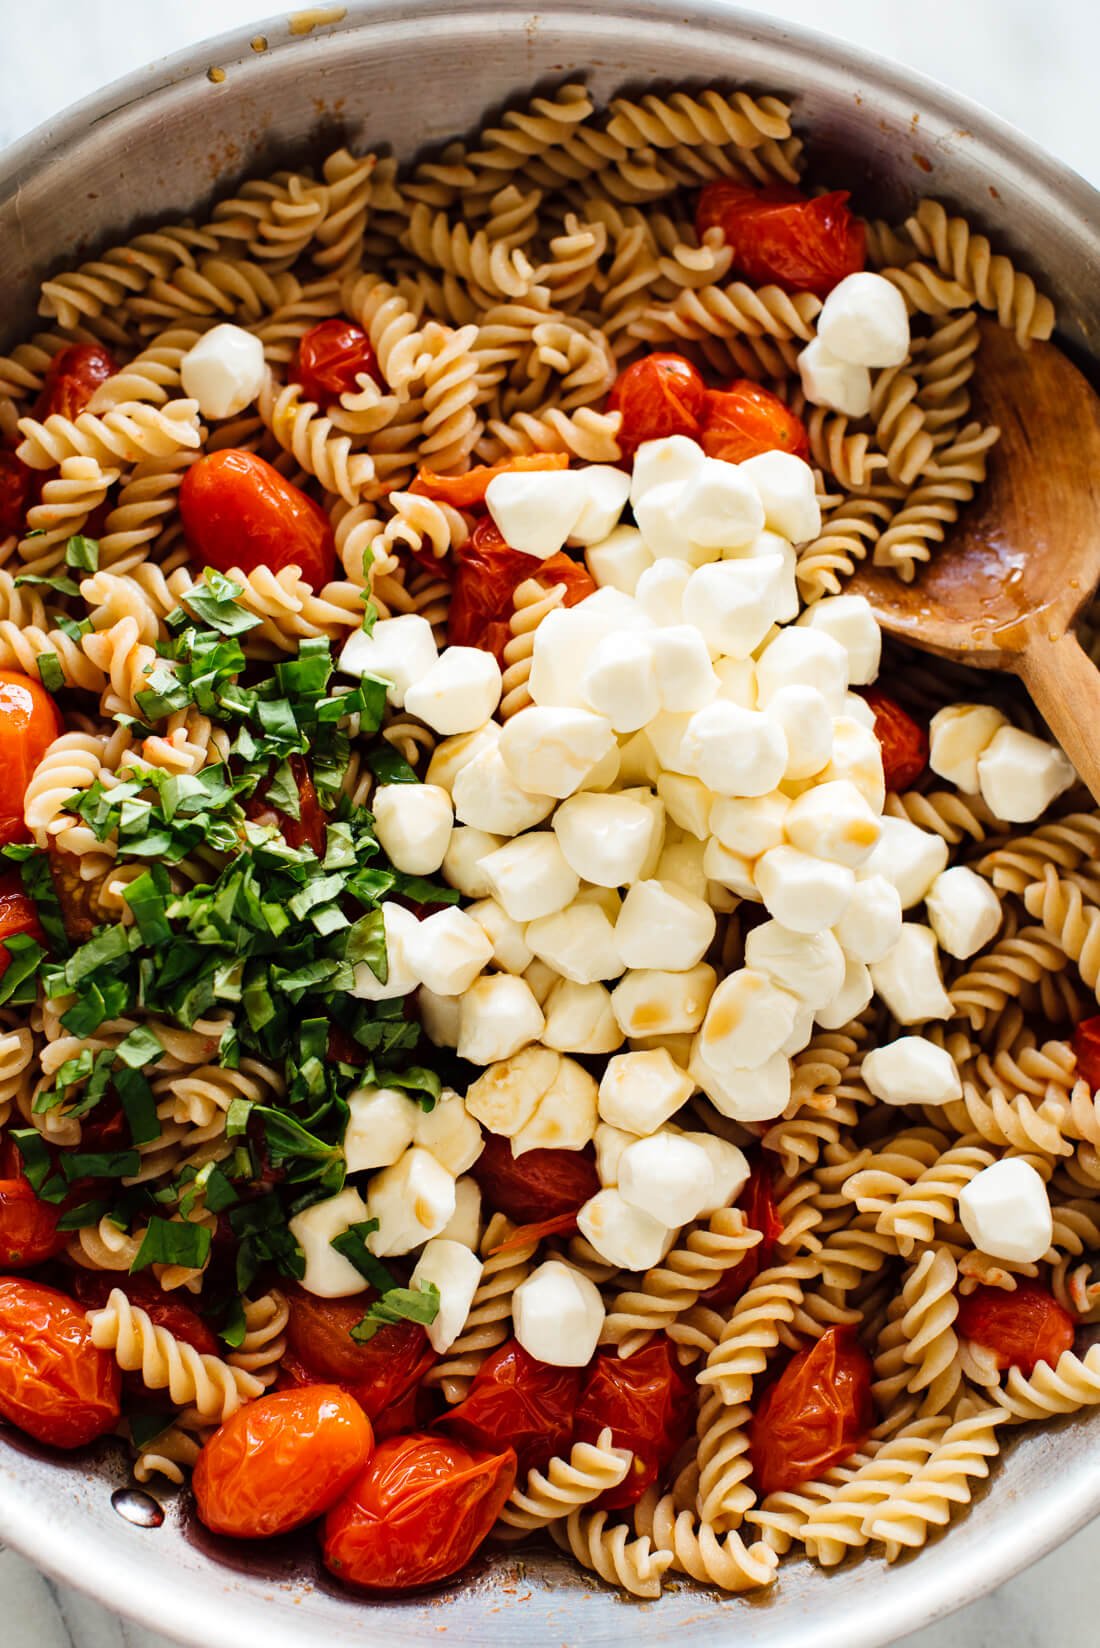 How to make Caprese pasta salad